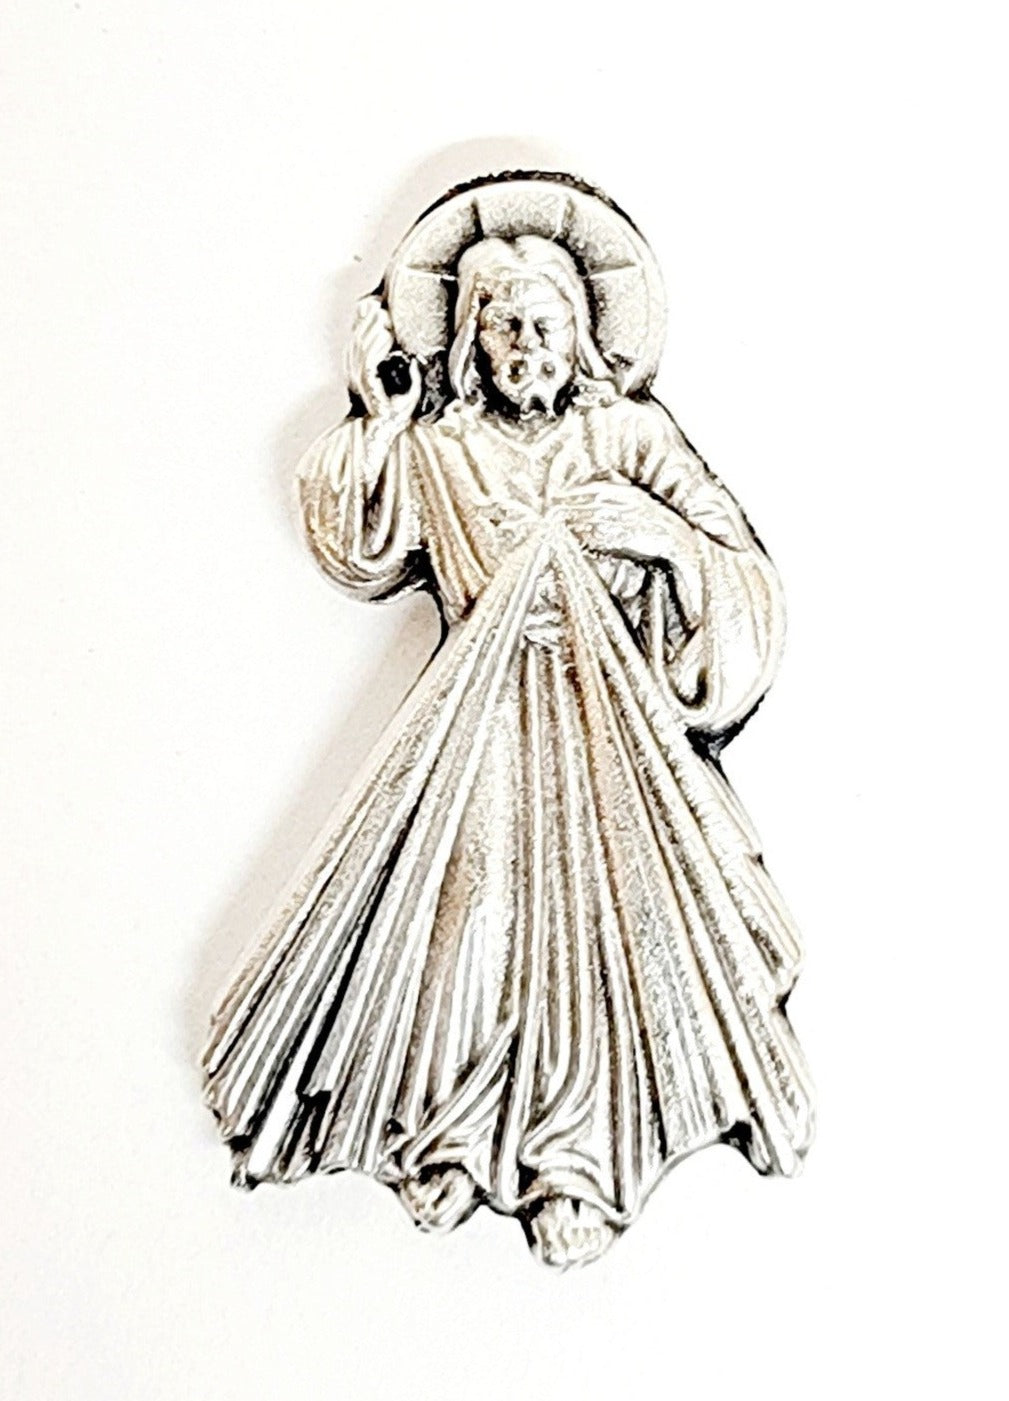 Divine Mercy Pin